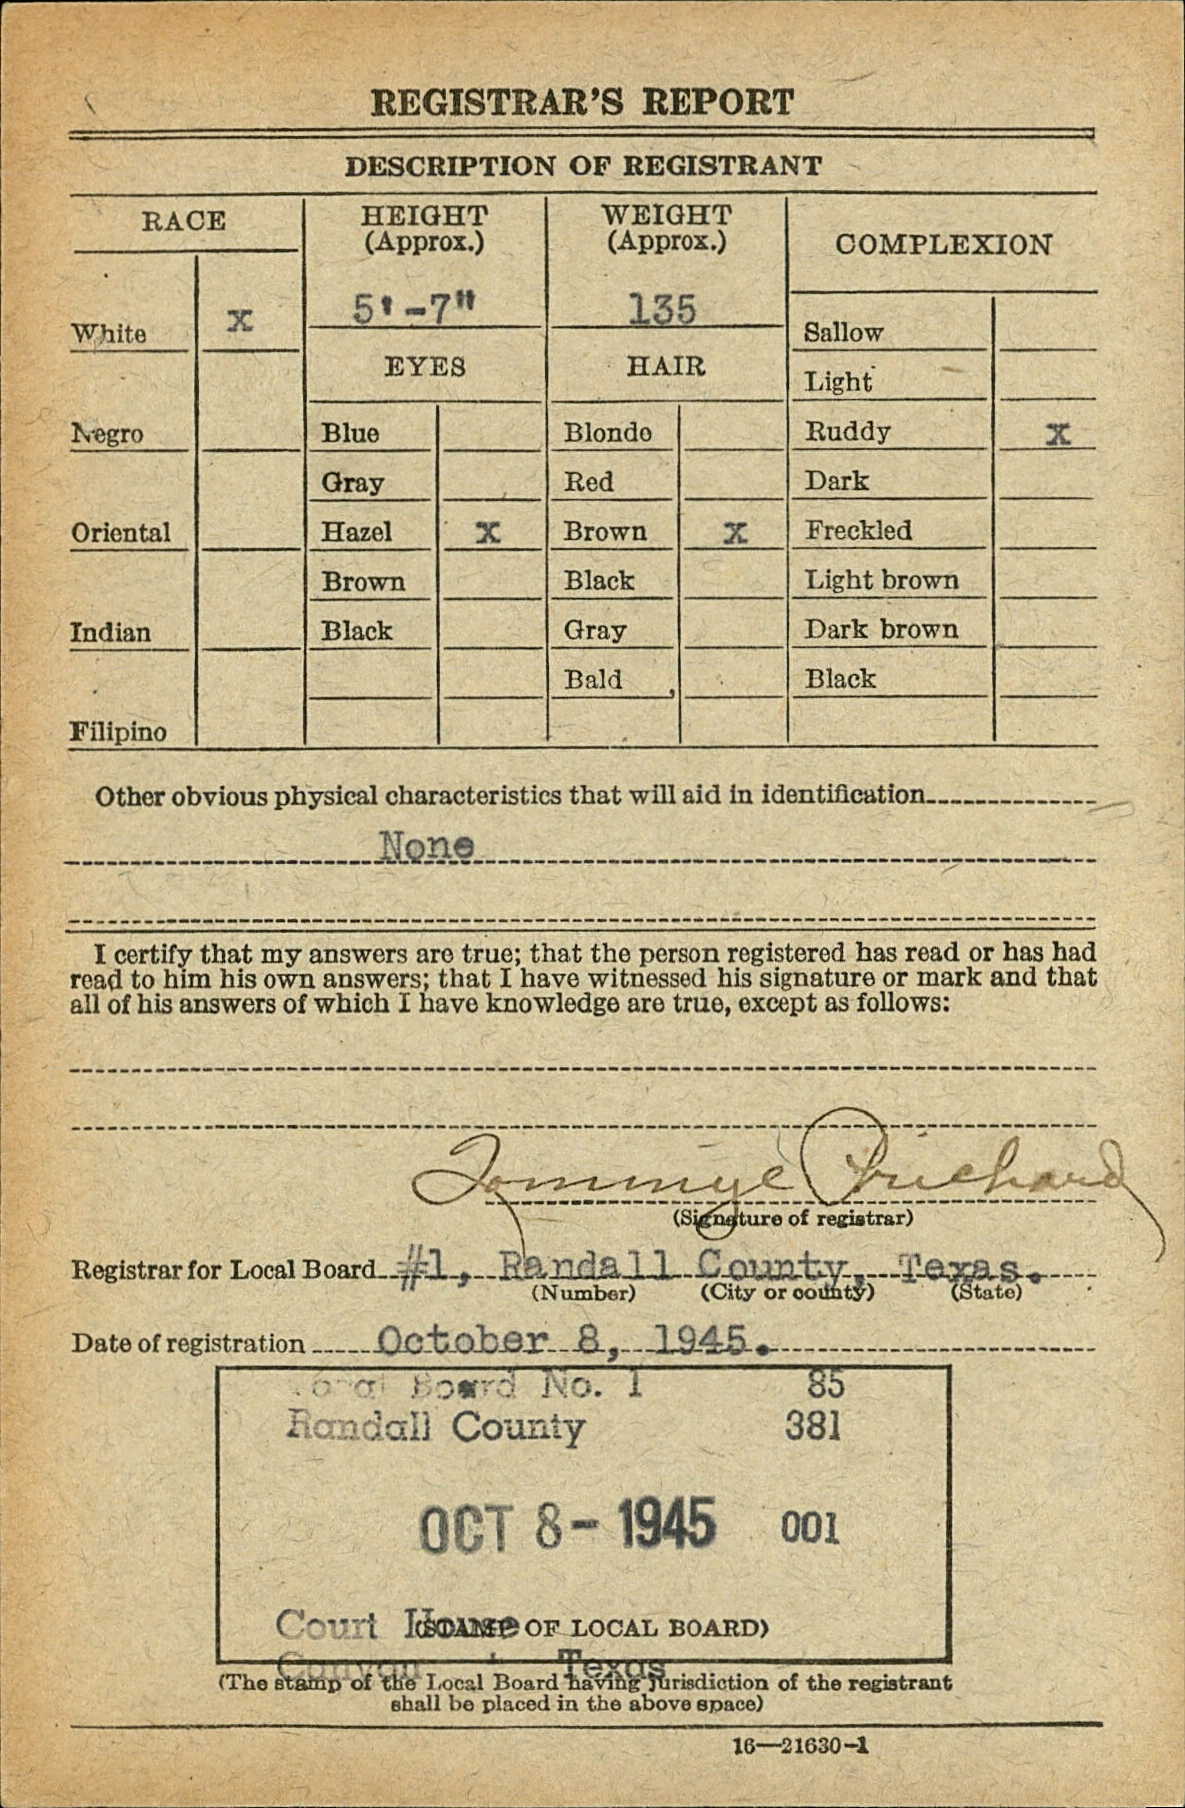 Harry T. Greenfield's World War II Draft Registration Card